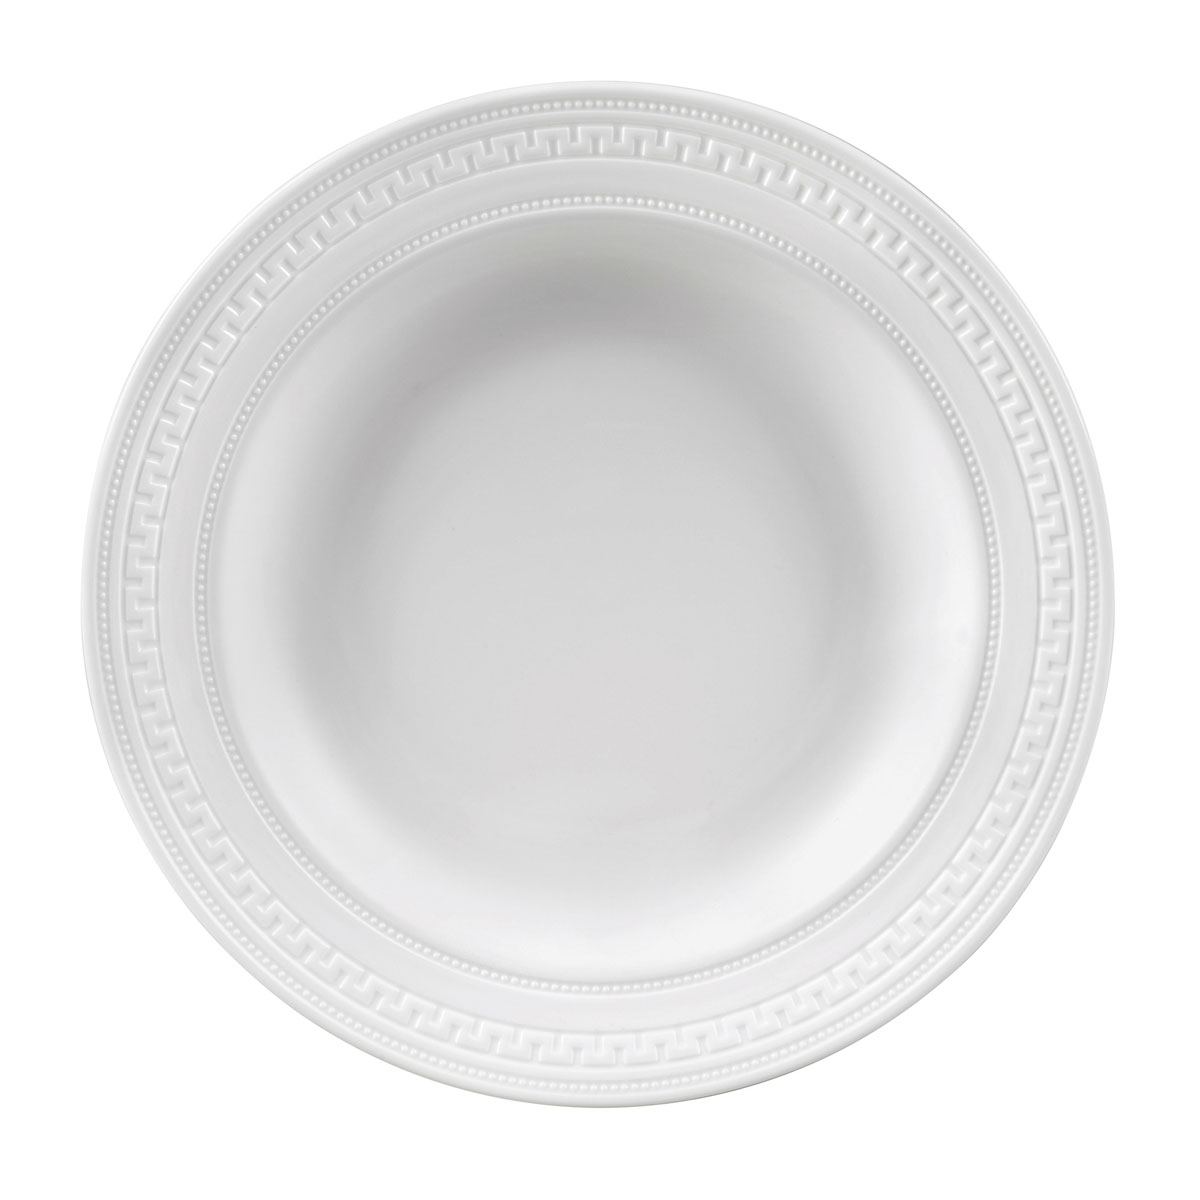 Тарелка суповая Wedgwood Intaglio 23 см тарелка акцентная гибискус 23 см wgw 40003896 wedgwood